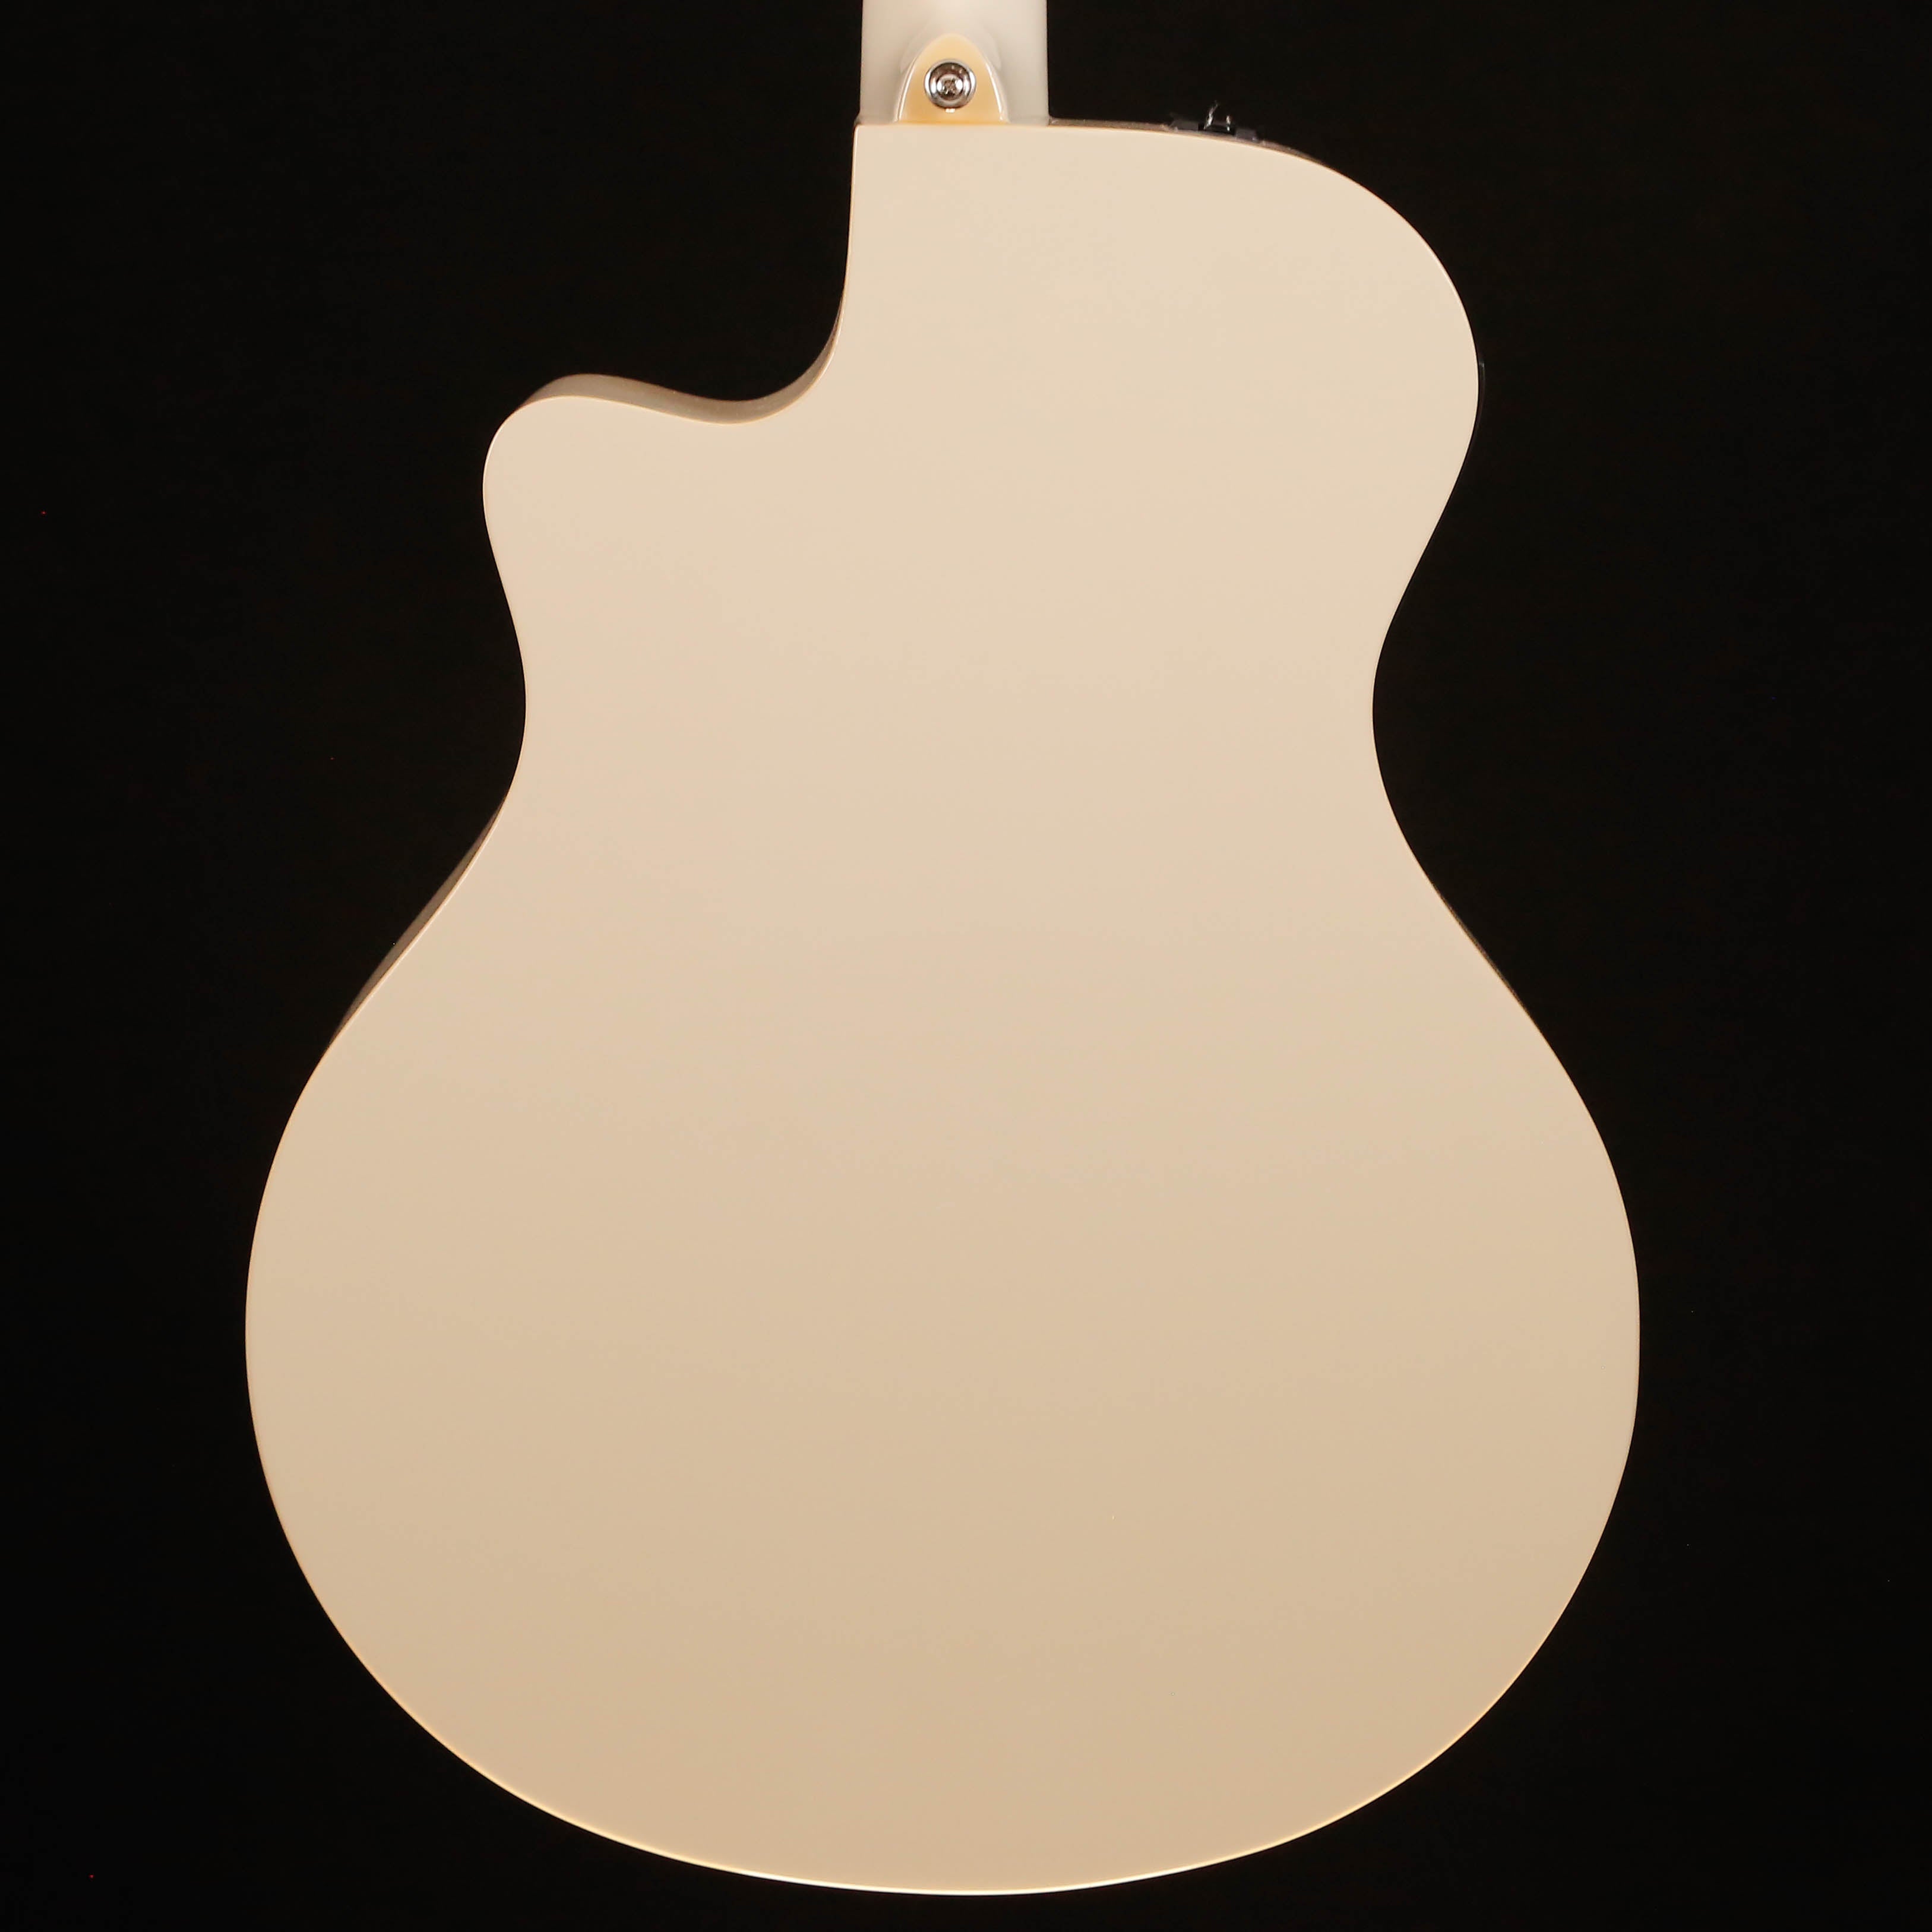 Yamaha APX600 Thinline Acoustic- Vintage White